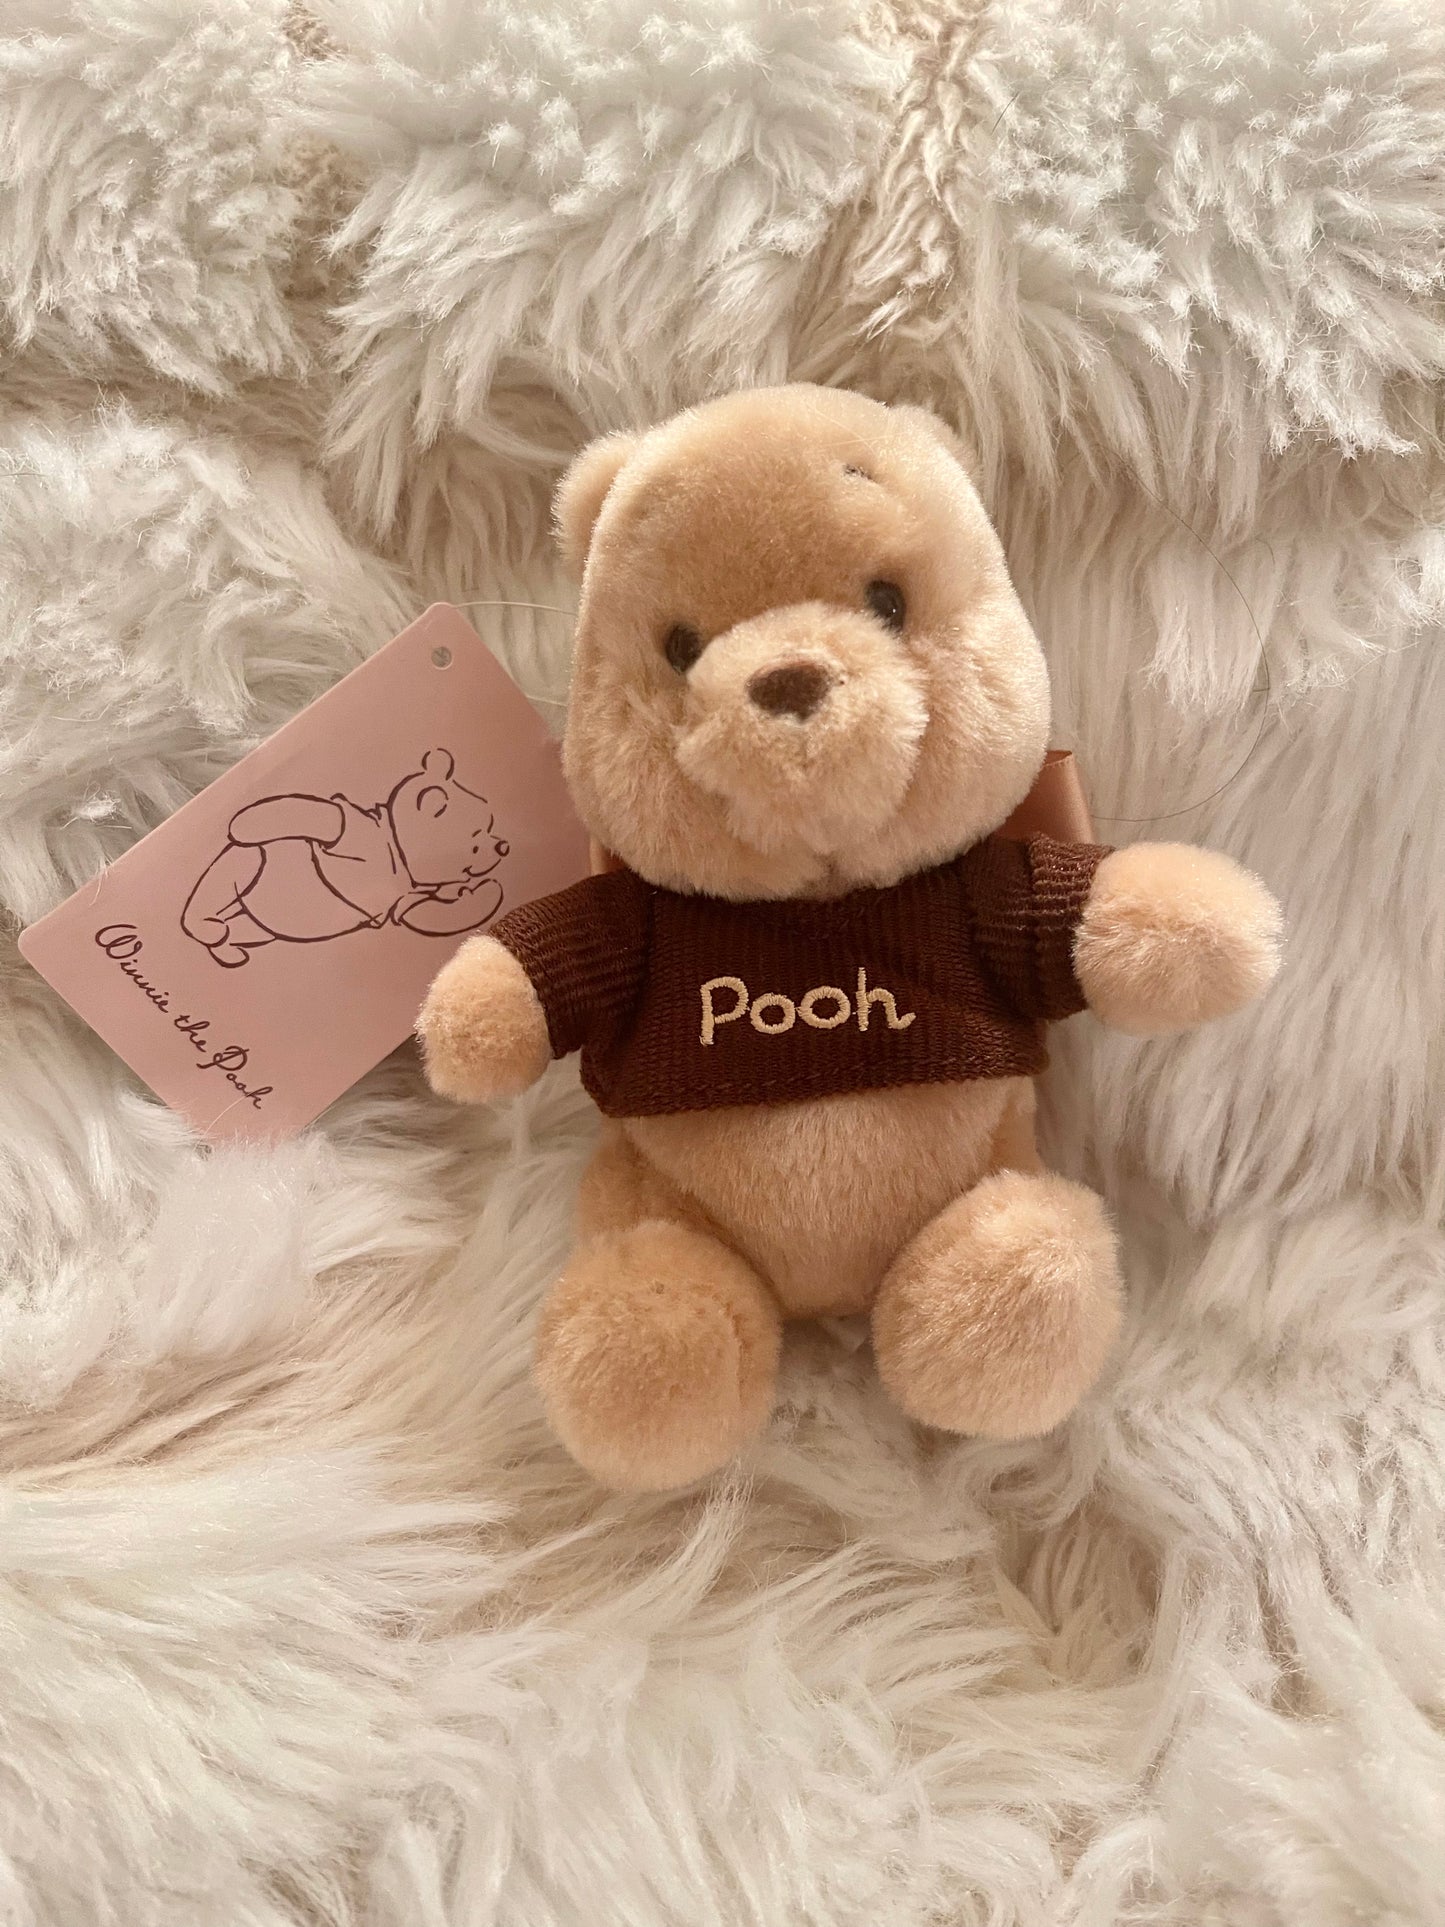 Disney store Japan Valentine’s Day Pooh keychain plush